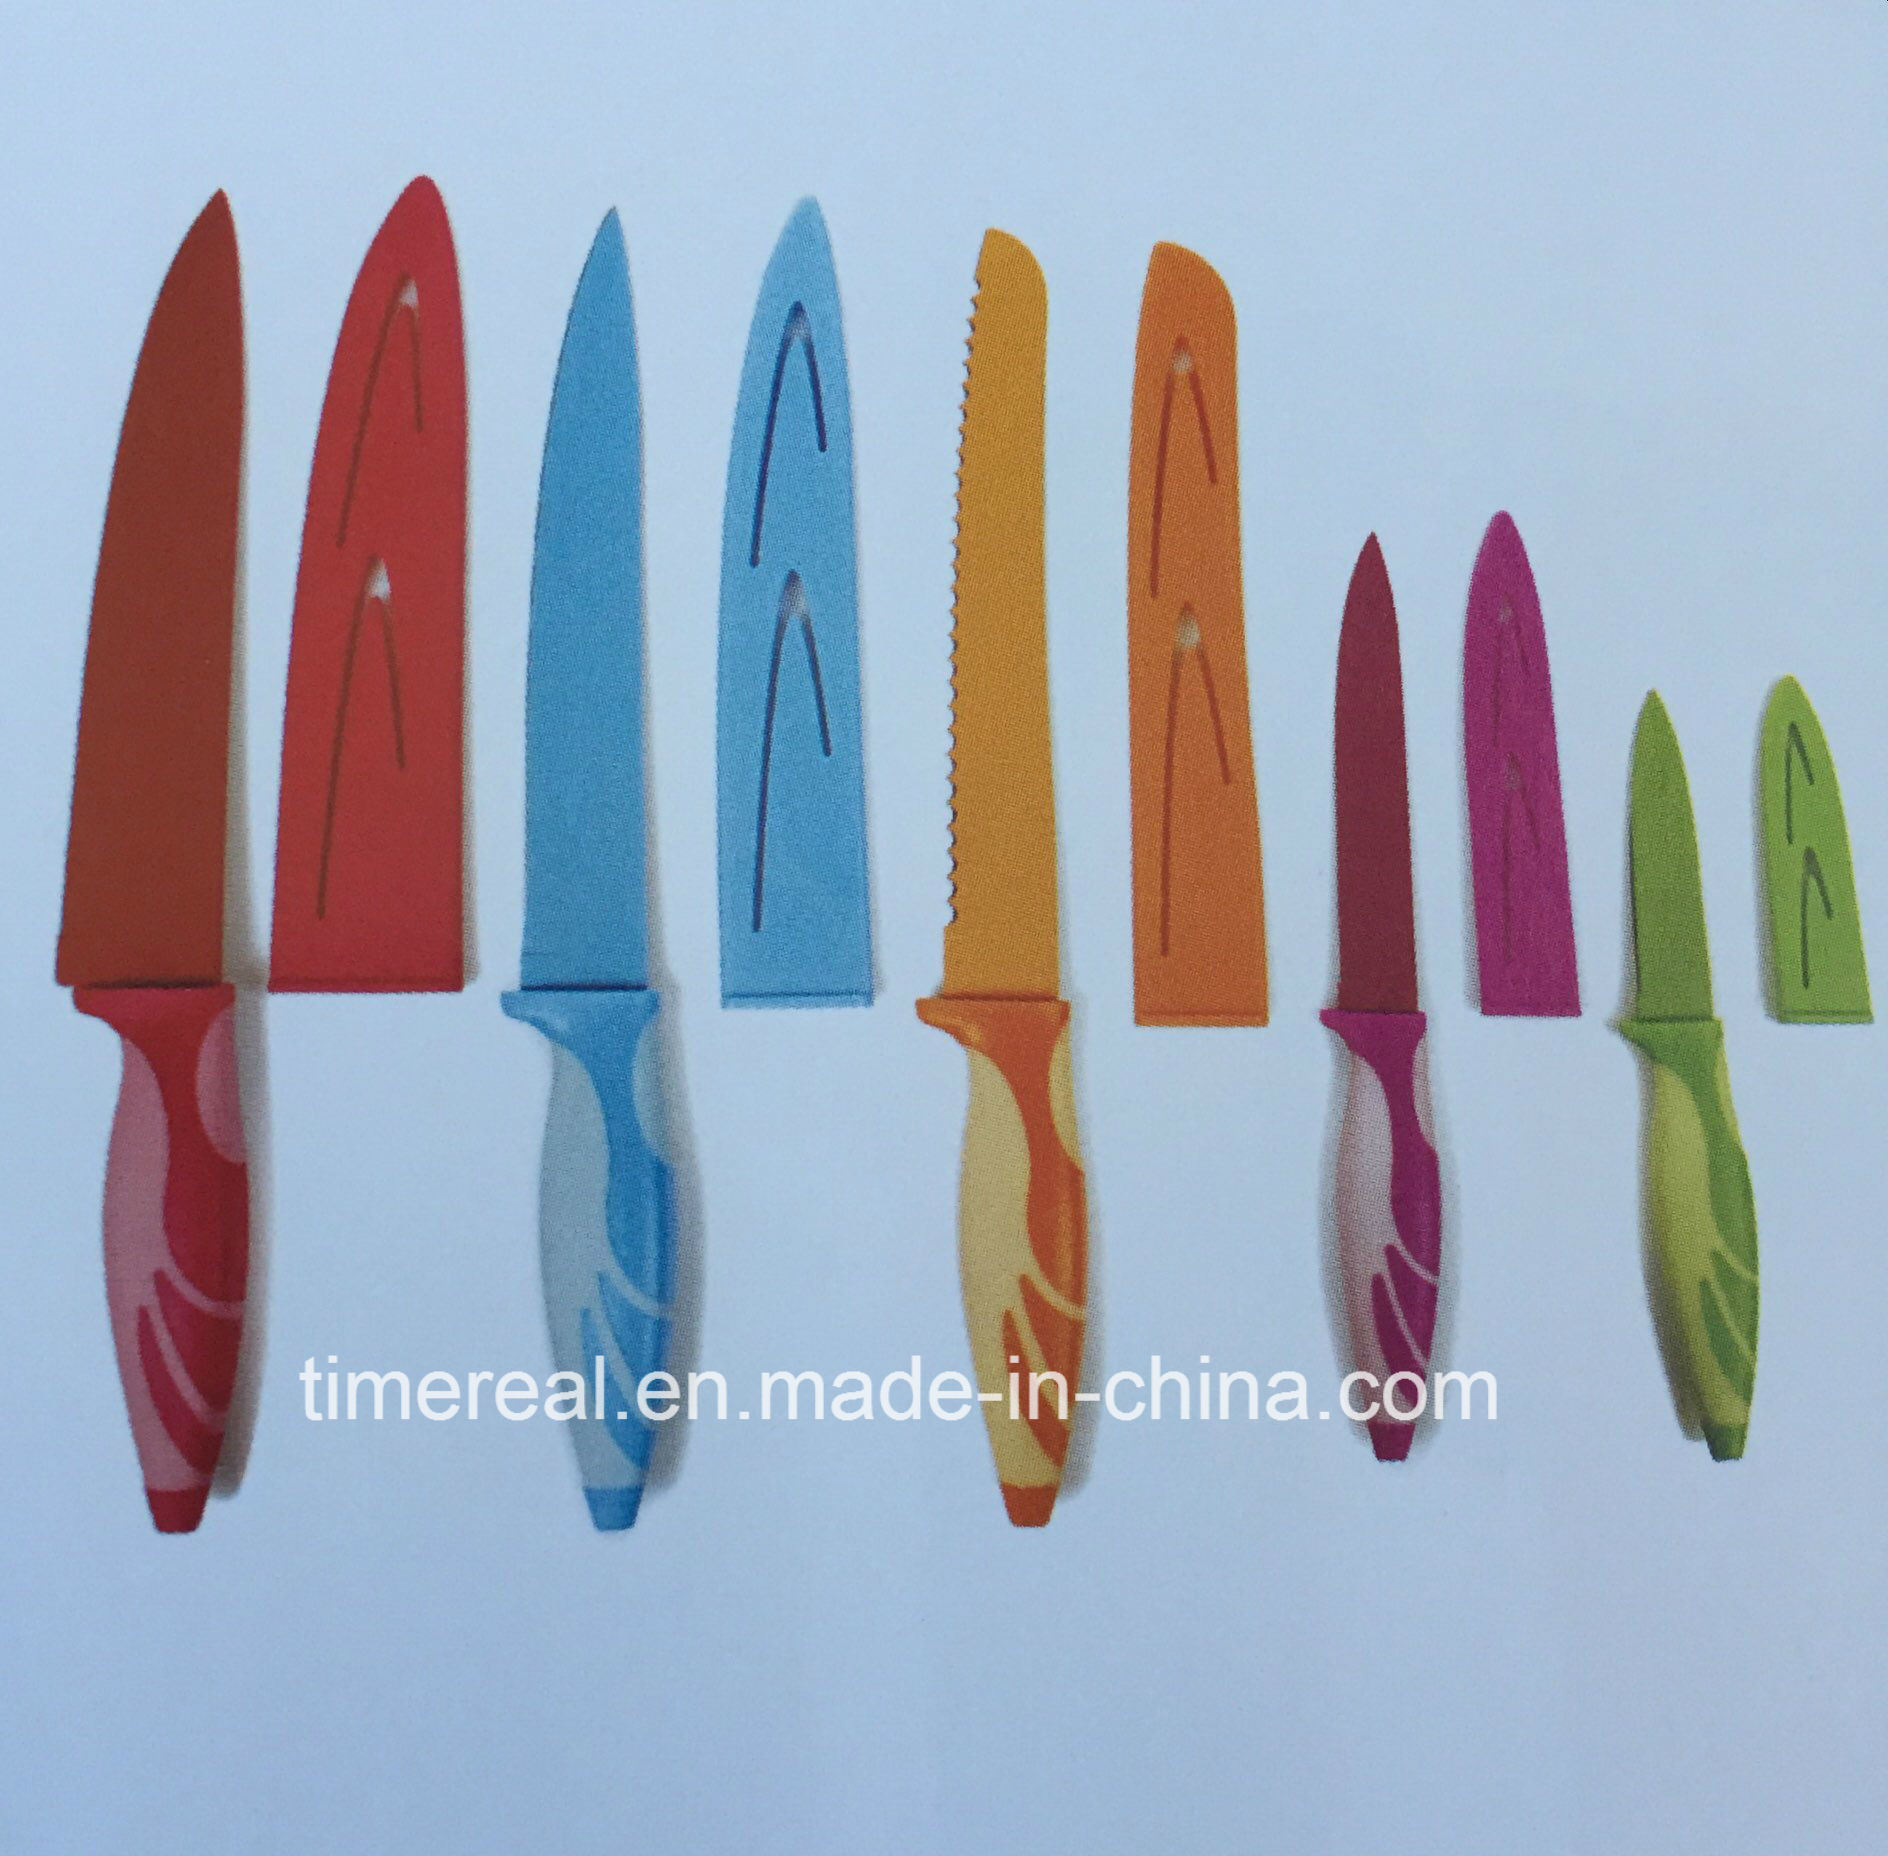 Free sample for Non-Stick Cookware Sets -
 Kitchen Knife/Knife/Chef Knife No. Fj-0022 – Long Prosper